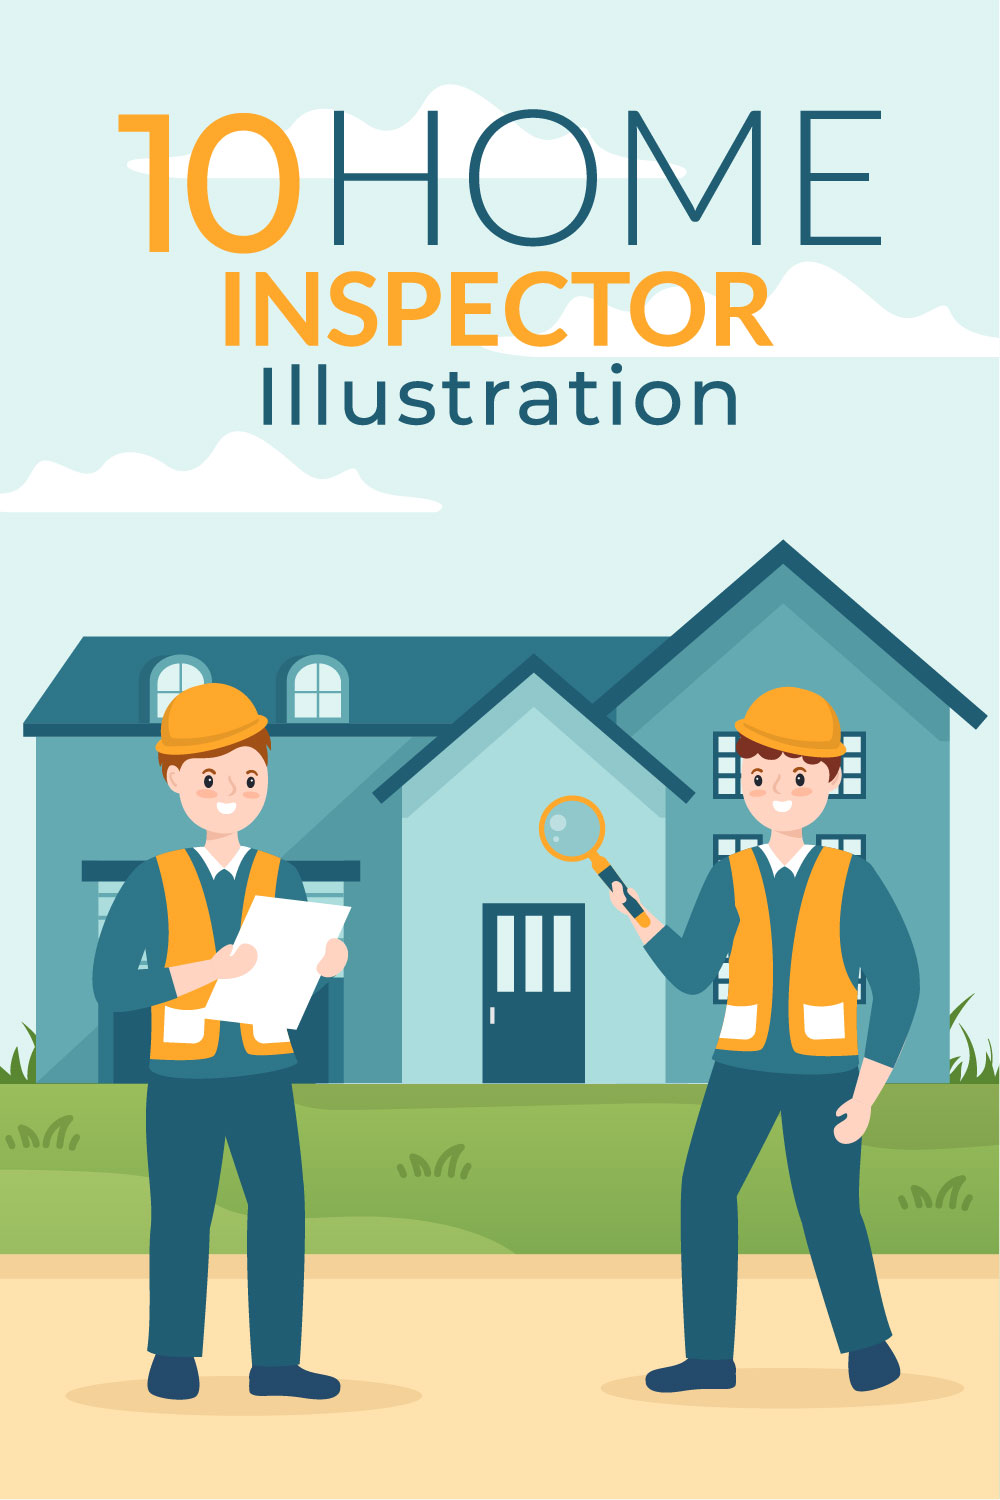 Home Inspector Cartoon Illustration pinterest image.